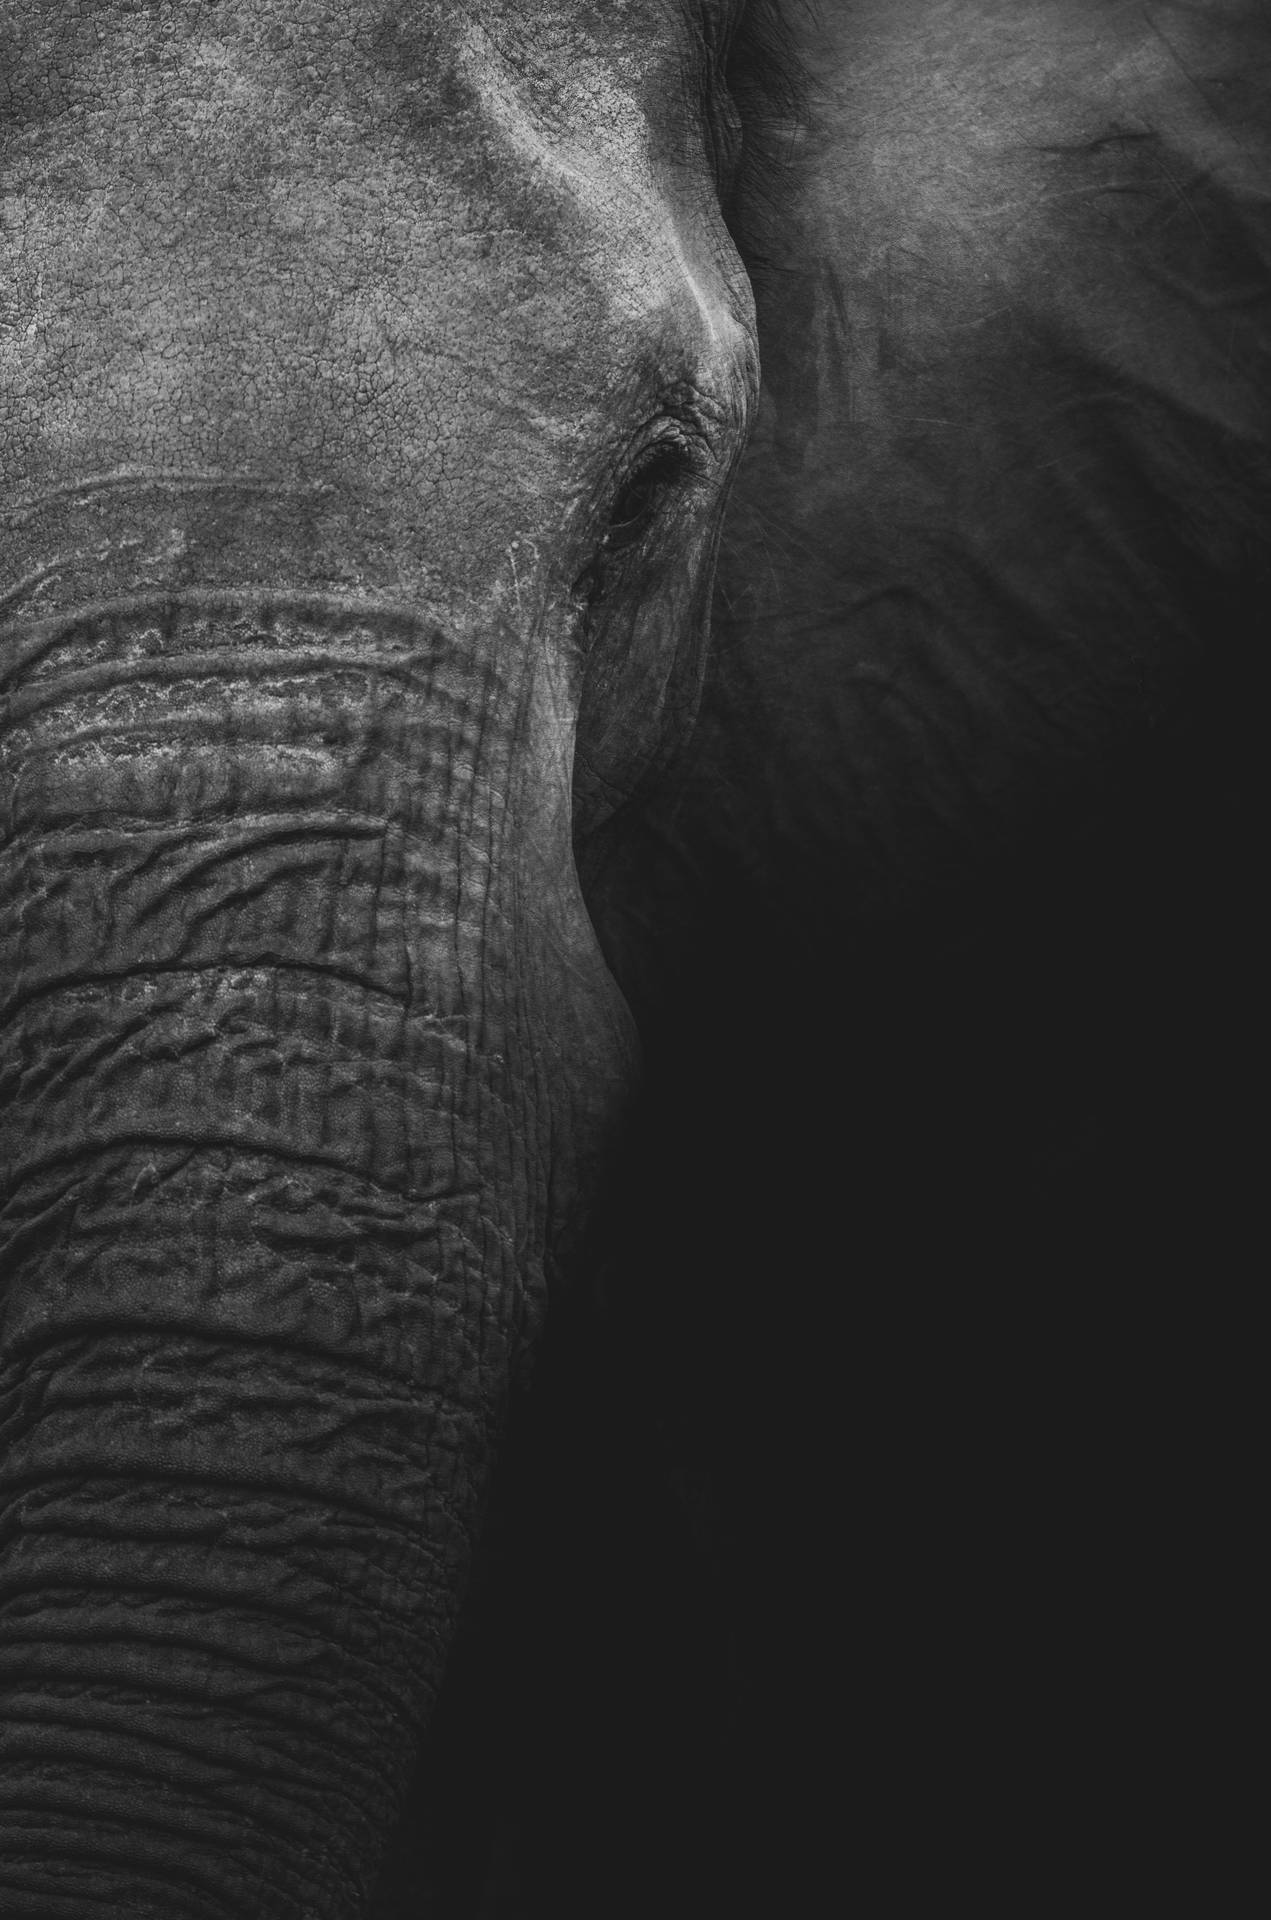 4k Elephant Portrait Grayscale